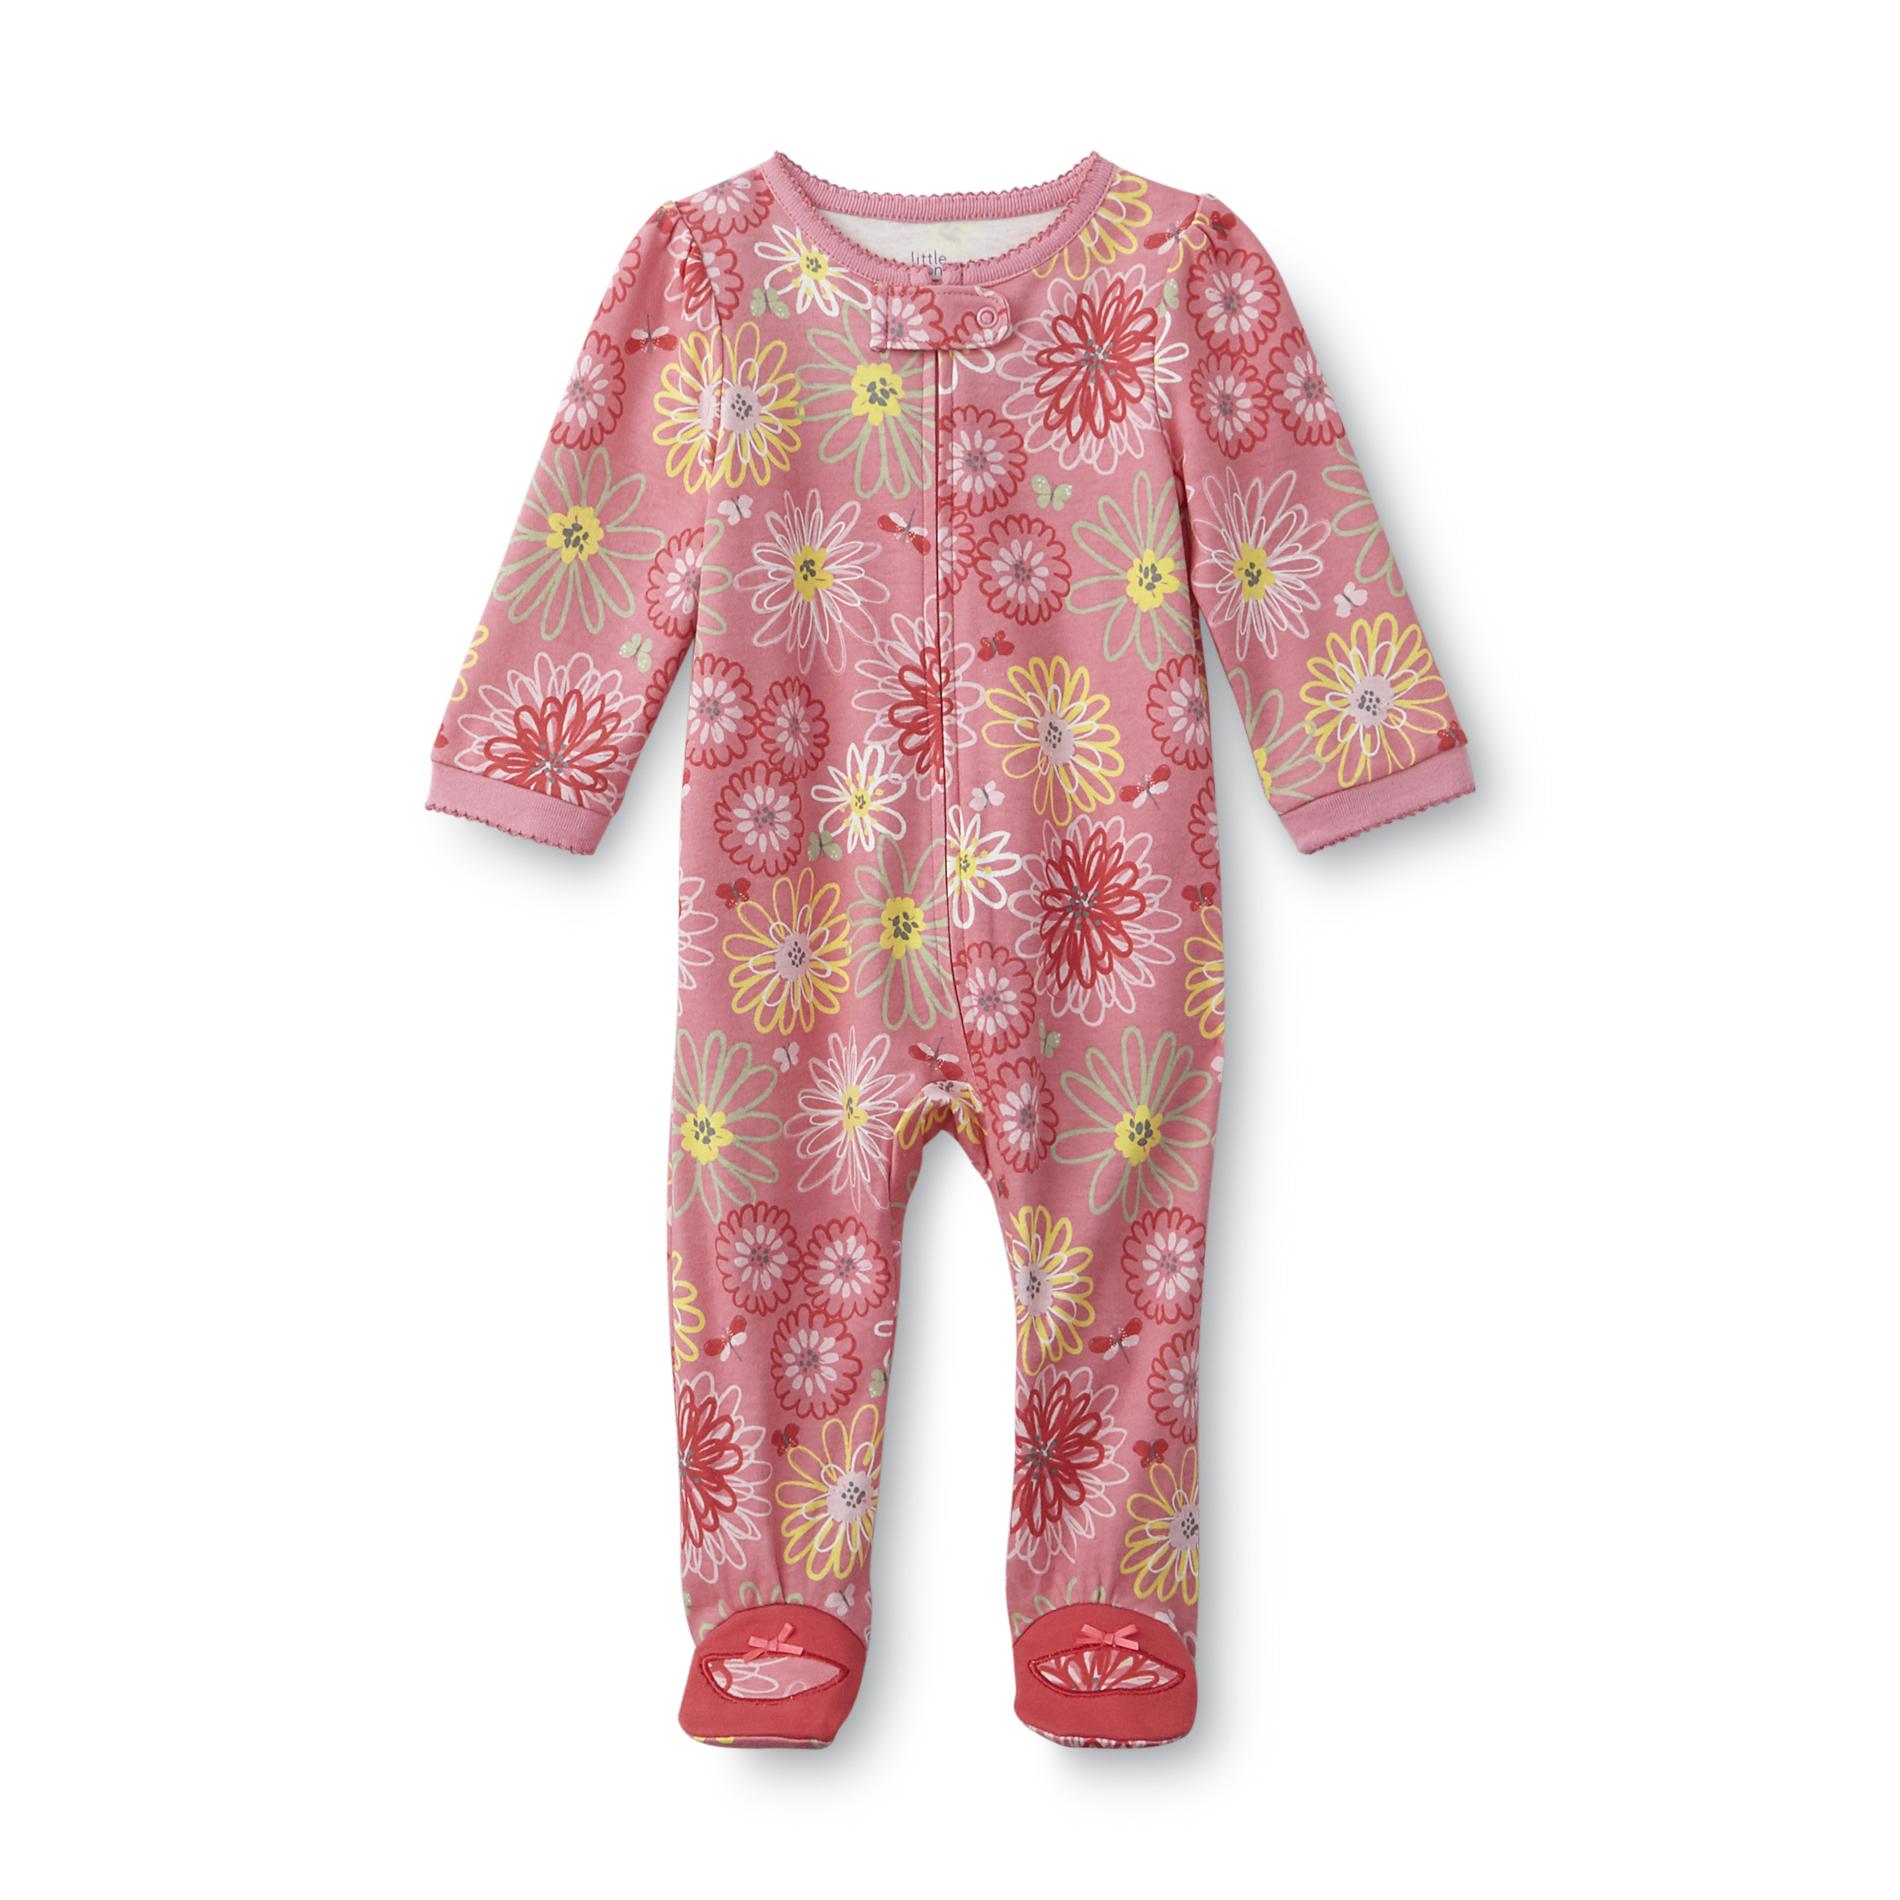 Little Wonders Newborn Girl's Footed Pajamas - Flowers